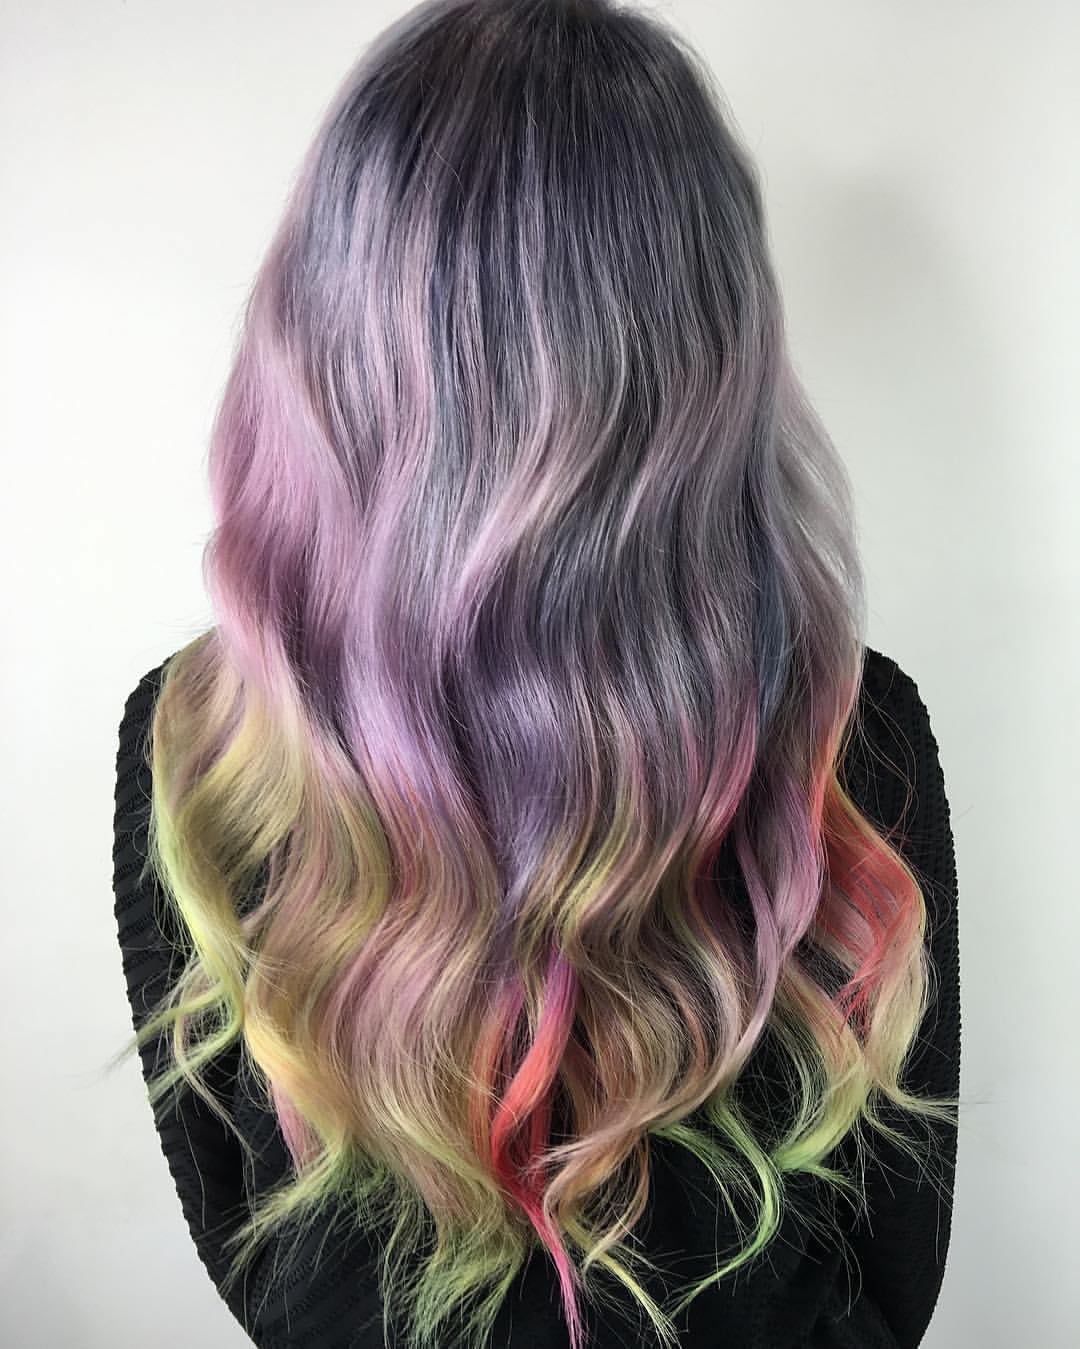 capelli ondulati arcobaleno